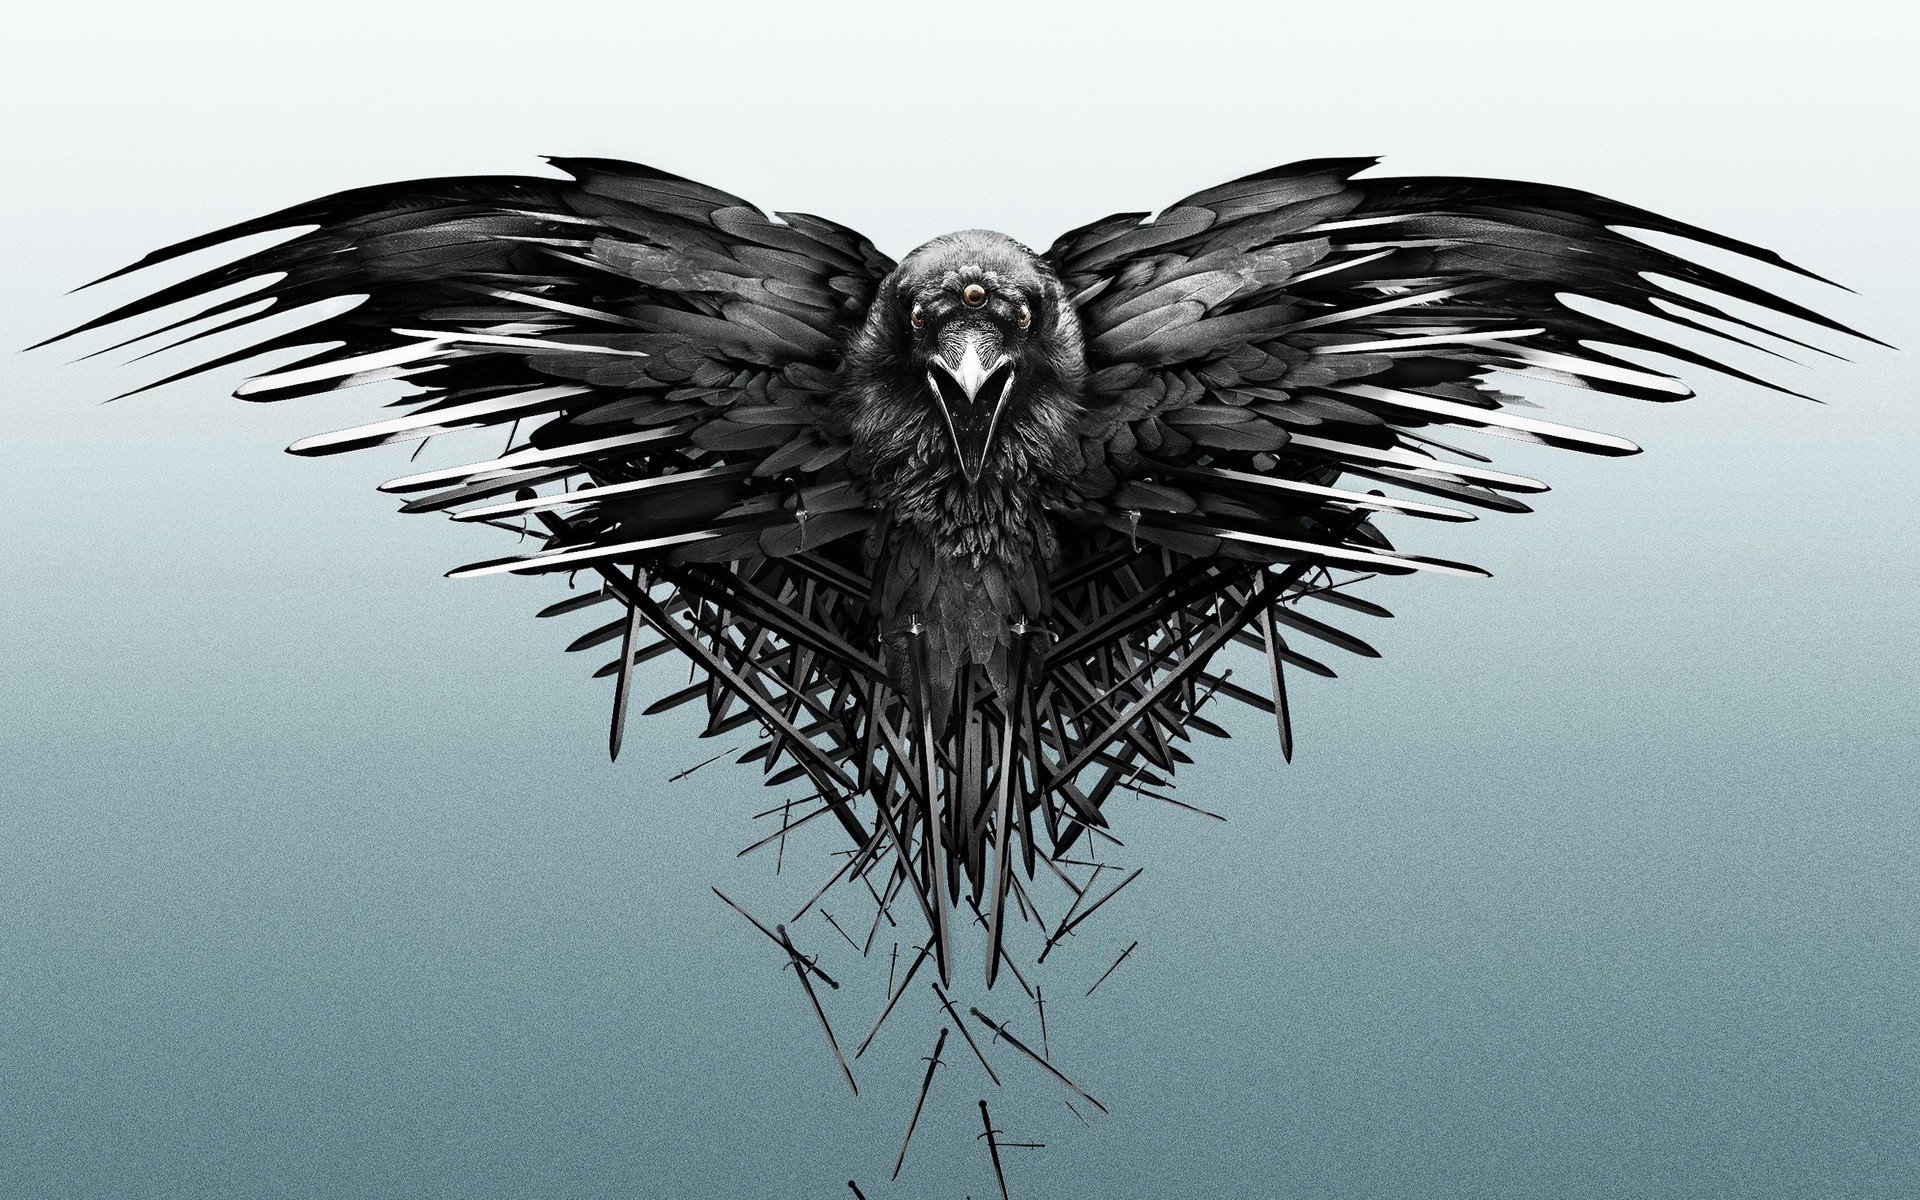 General 1920x1200 Game of Thrones raven digital art